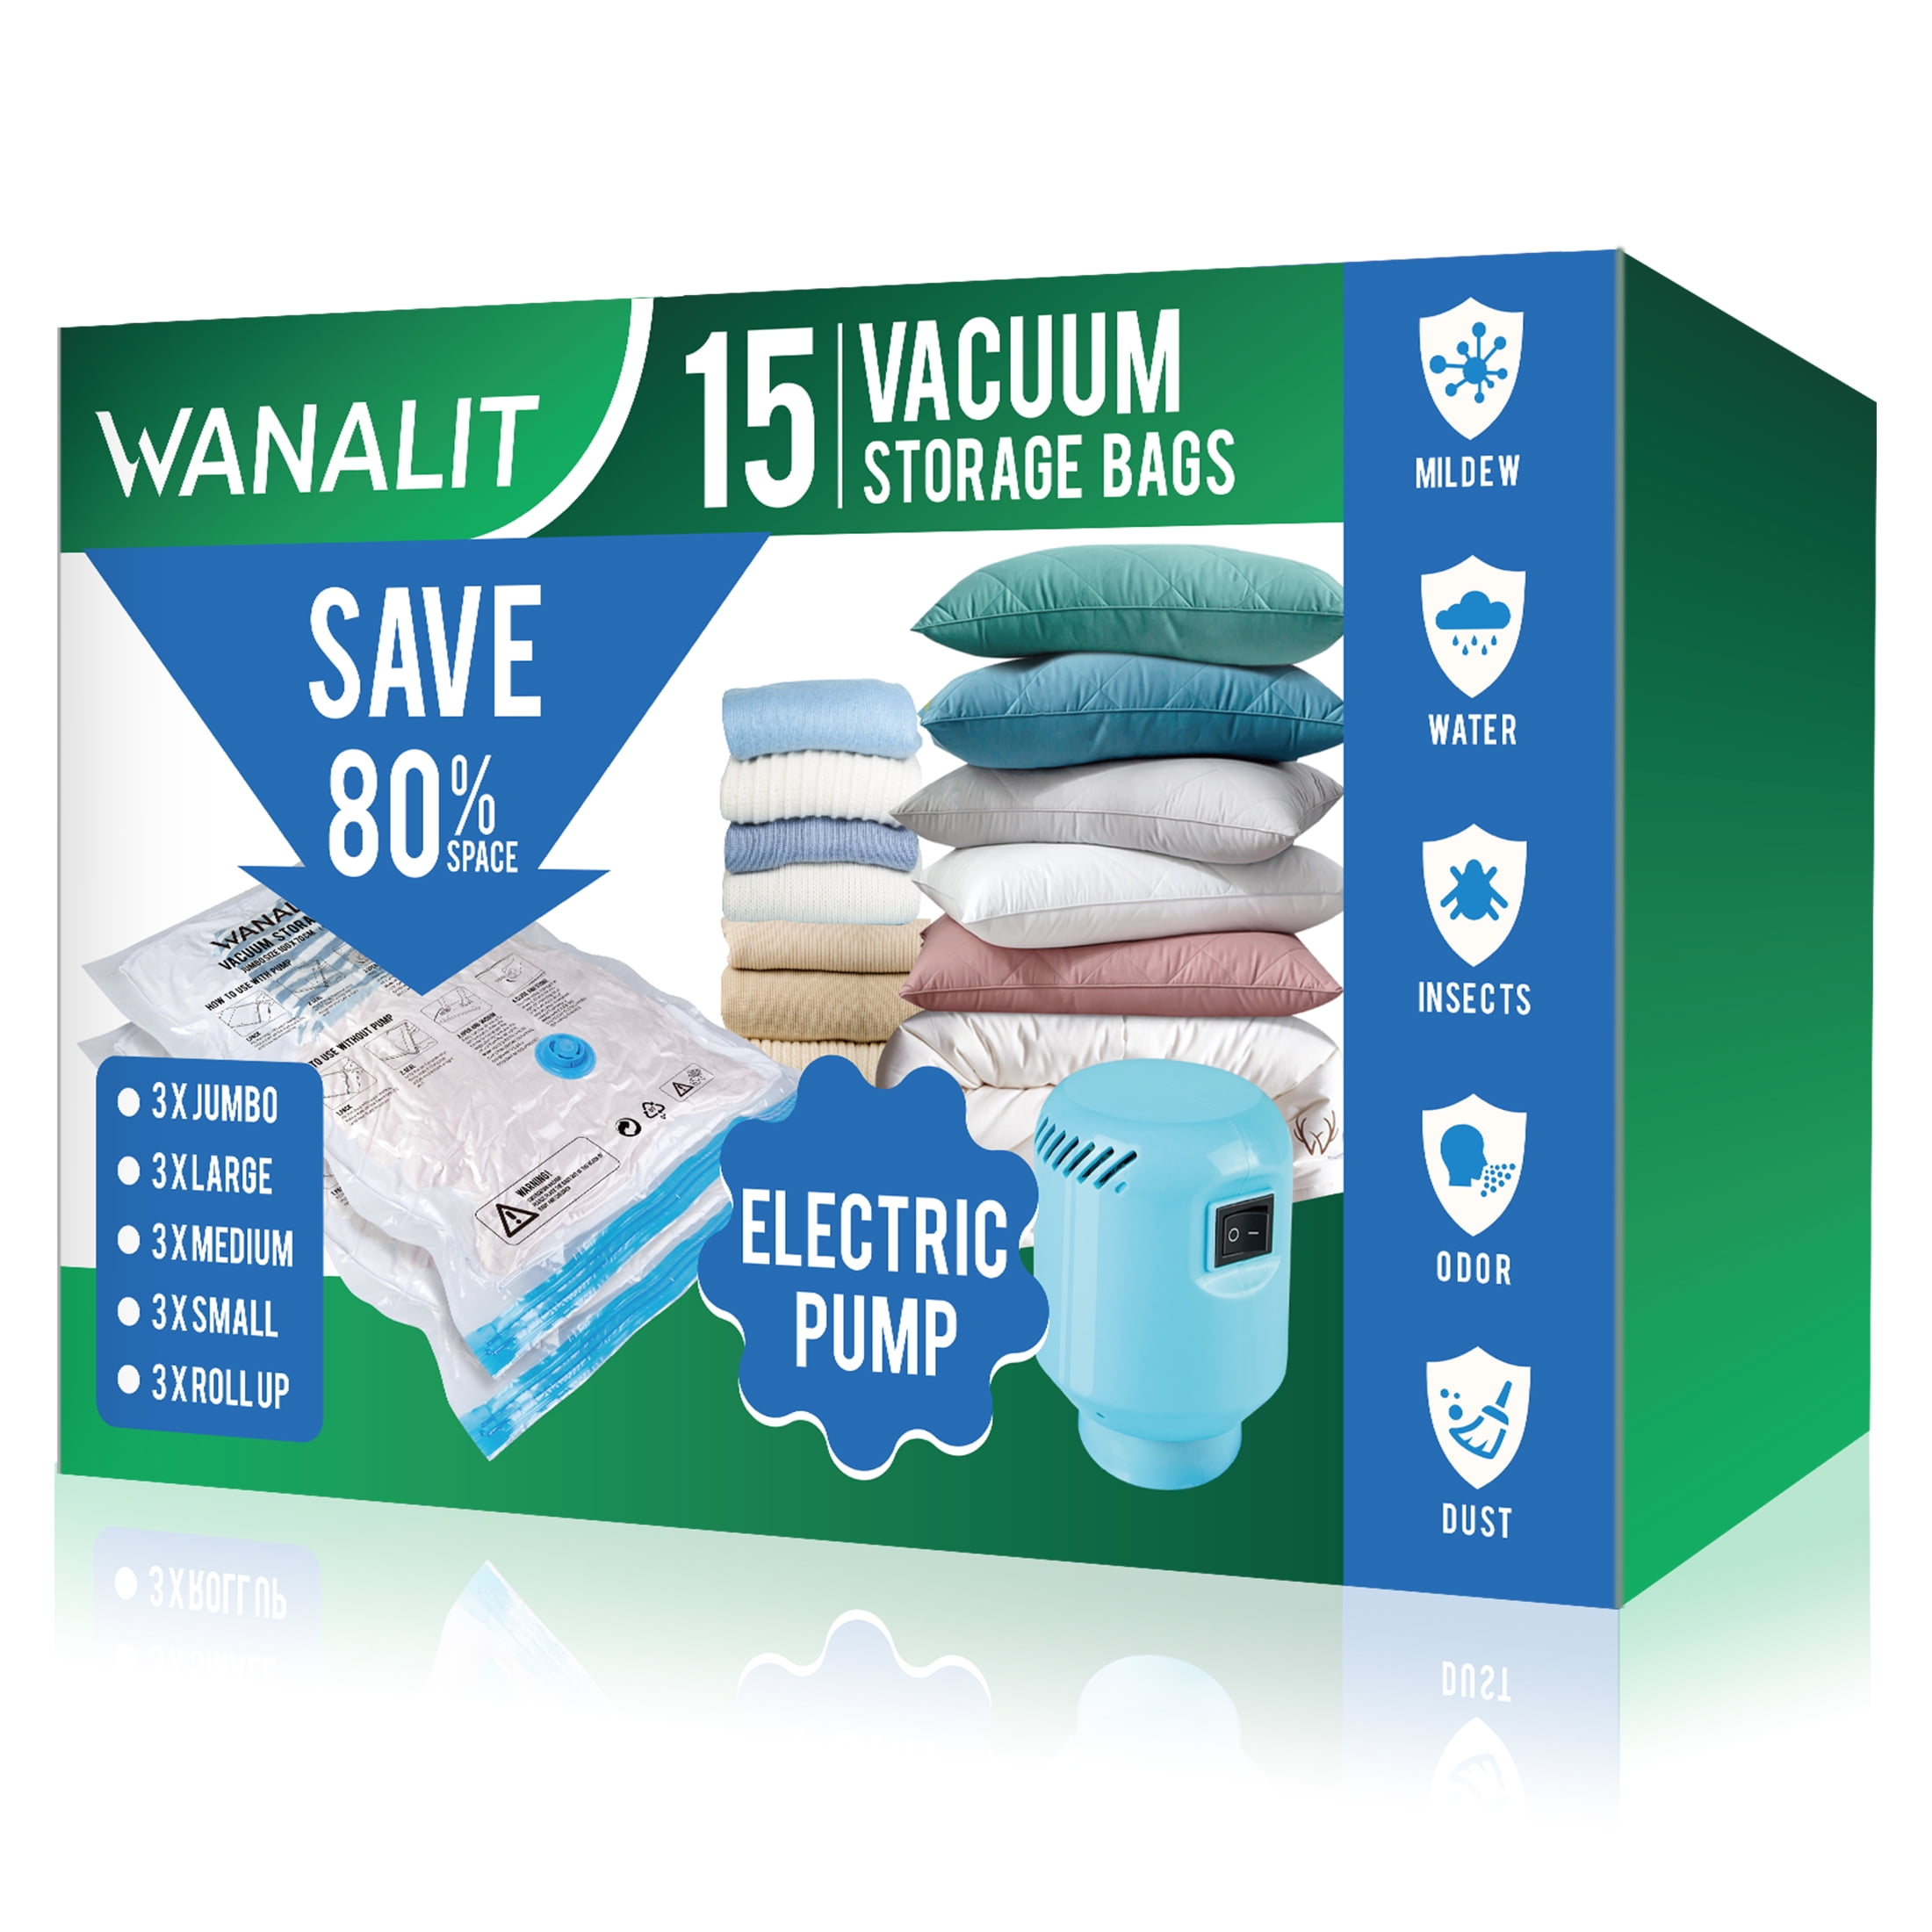 WANALIT Vacuum Storage Bags,15 Combo Space Saver Vacuum Storage Bags(3  Jumbo/3 Large/3 Medium/3 Small/3 Roll up), Airtight Vacuum Sealed Bags with